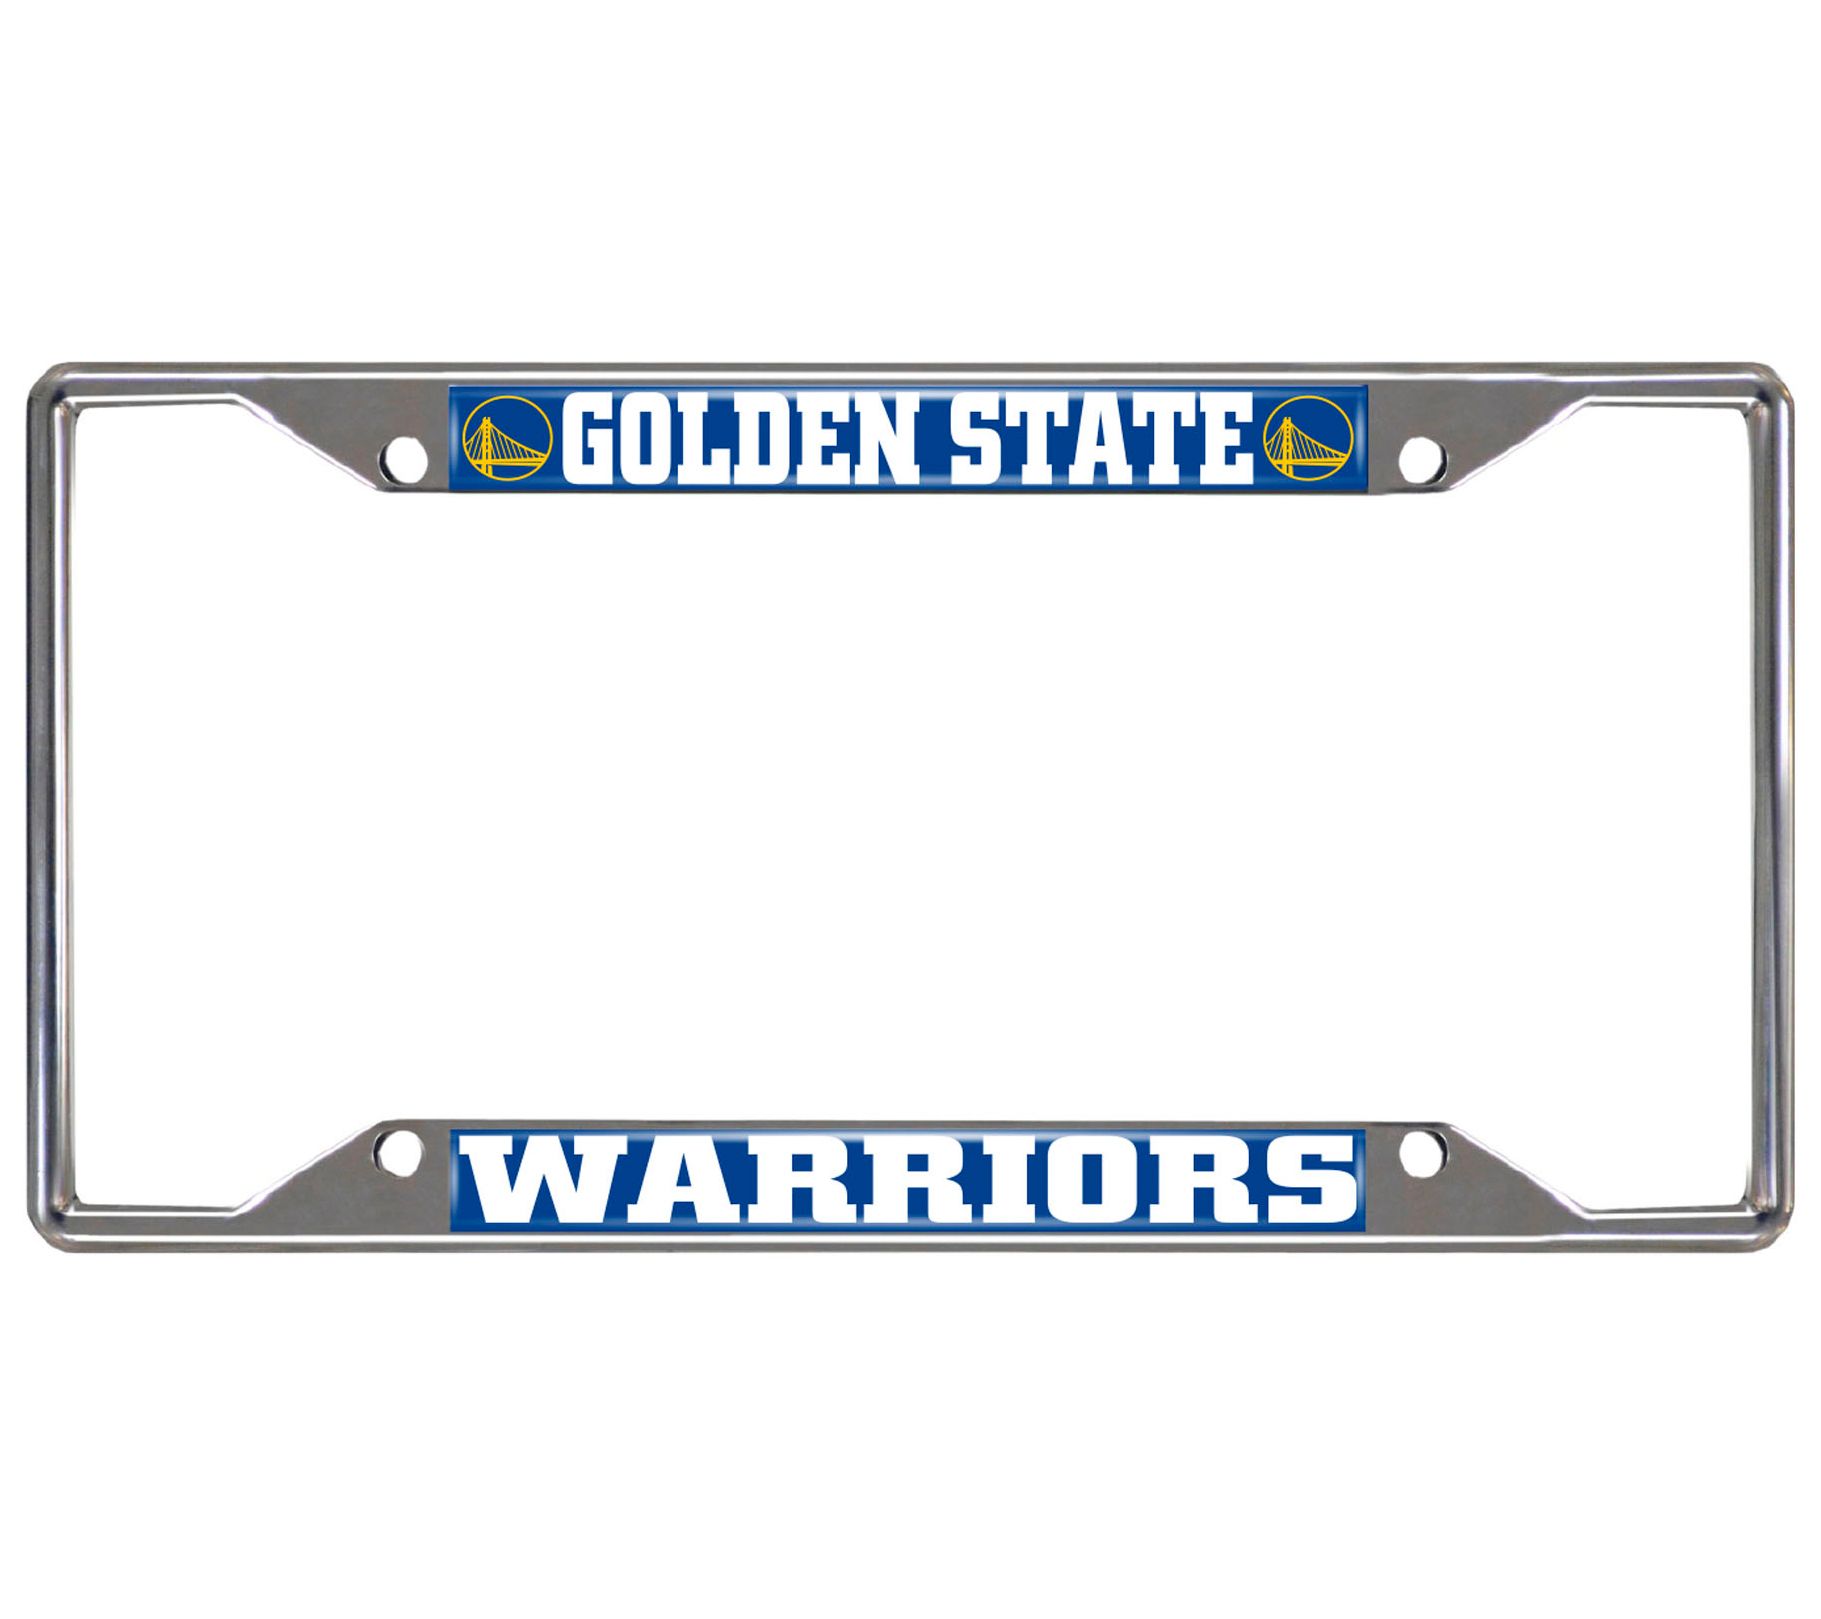 FANMATS Golden State Warriors License Plate Frame